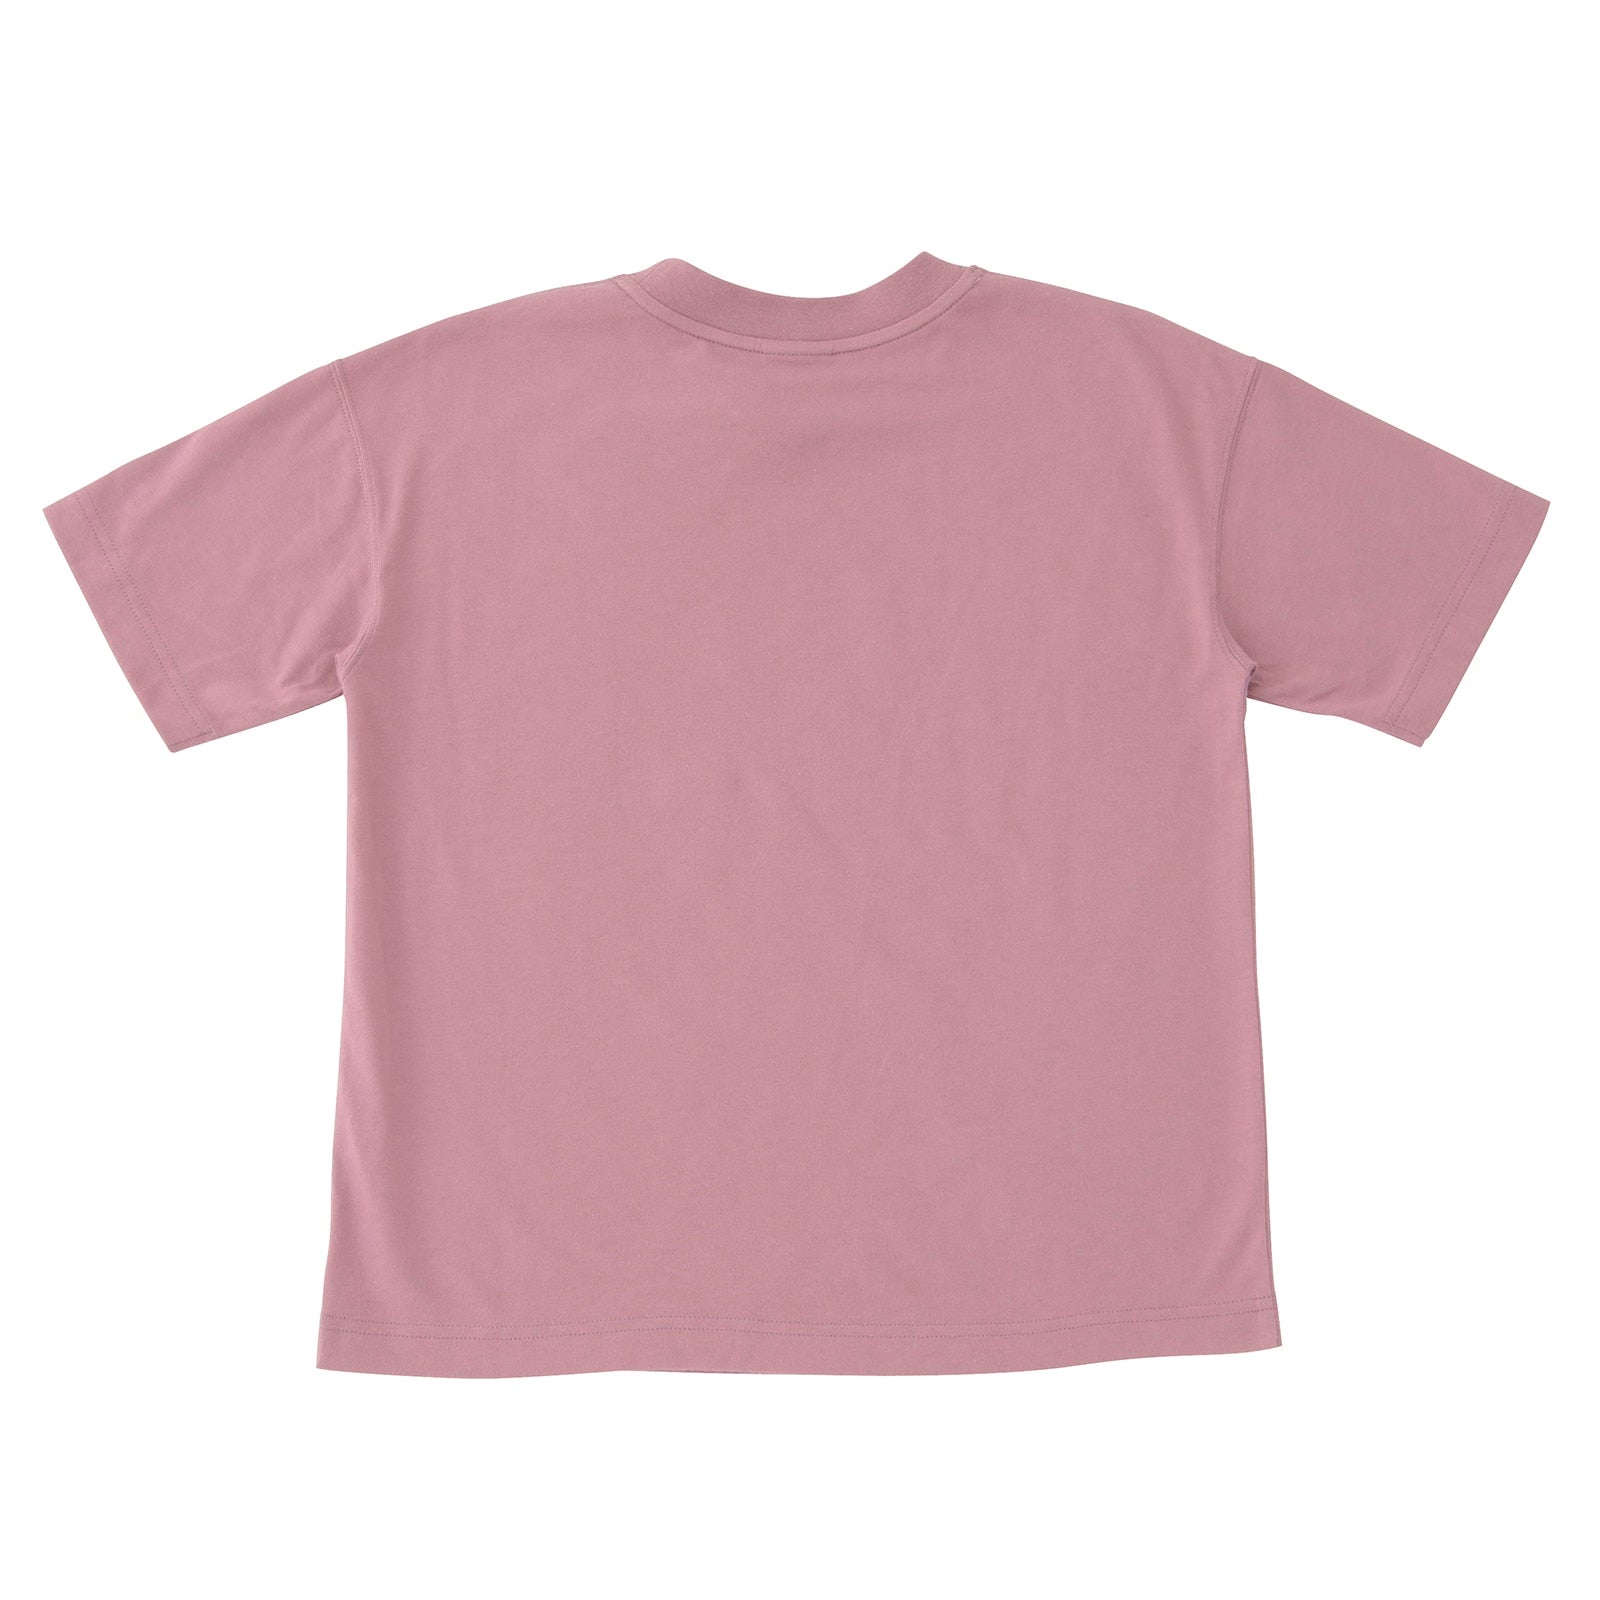 Moisture-wicking Graphic Short Sleeve T-Shirt